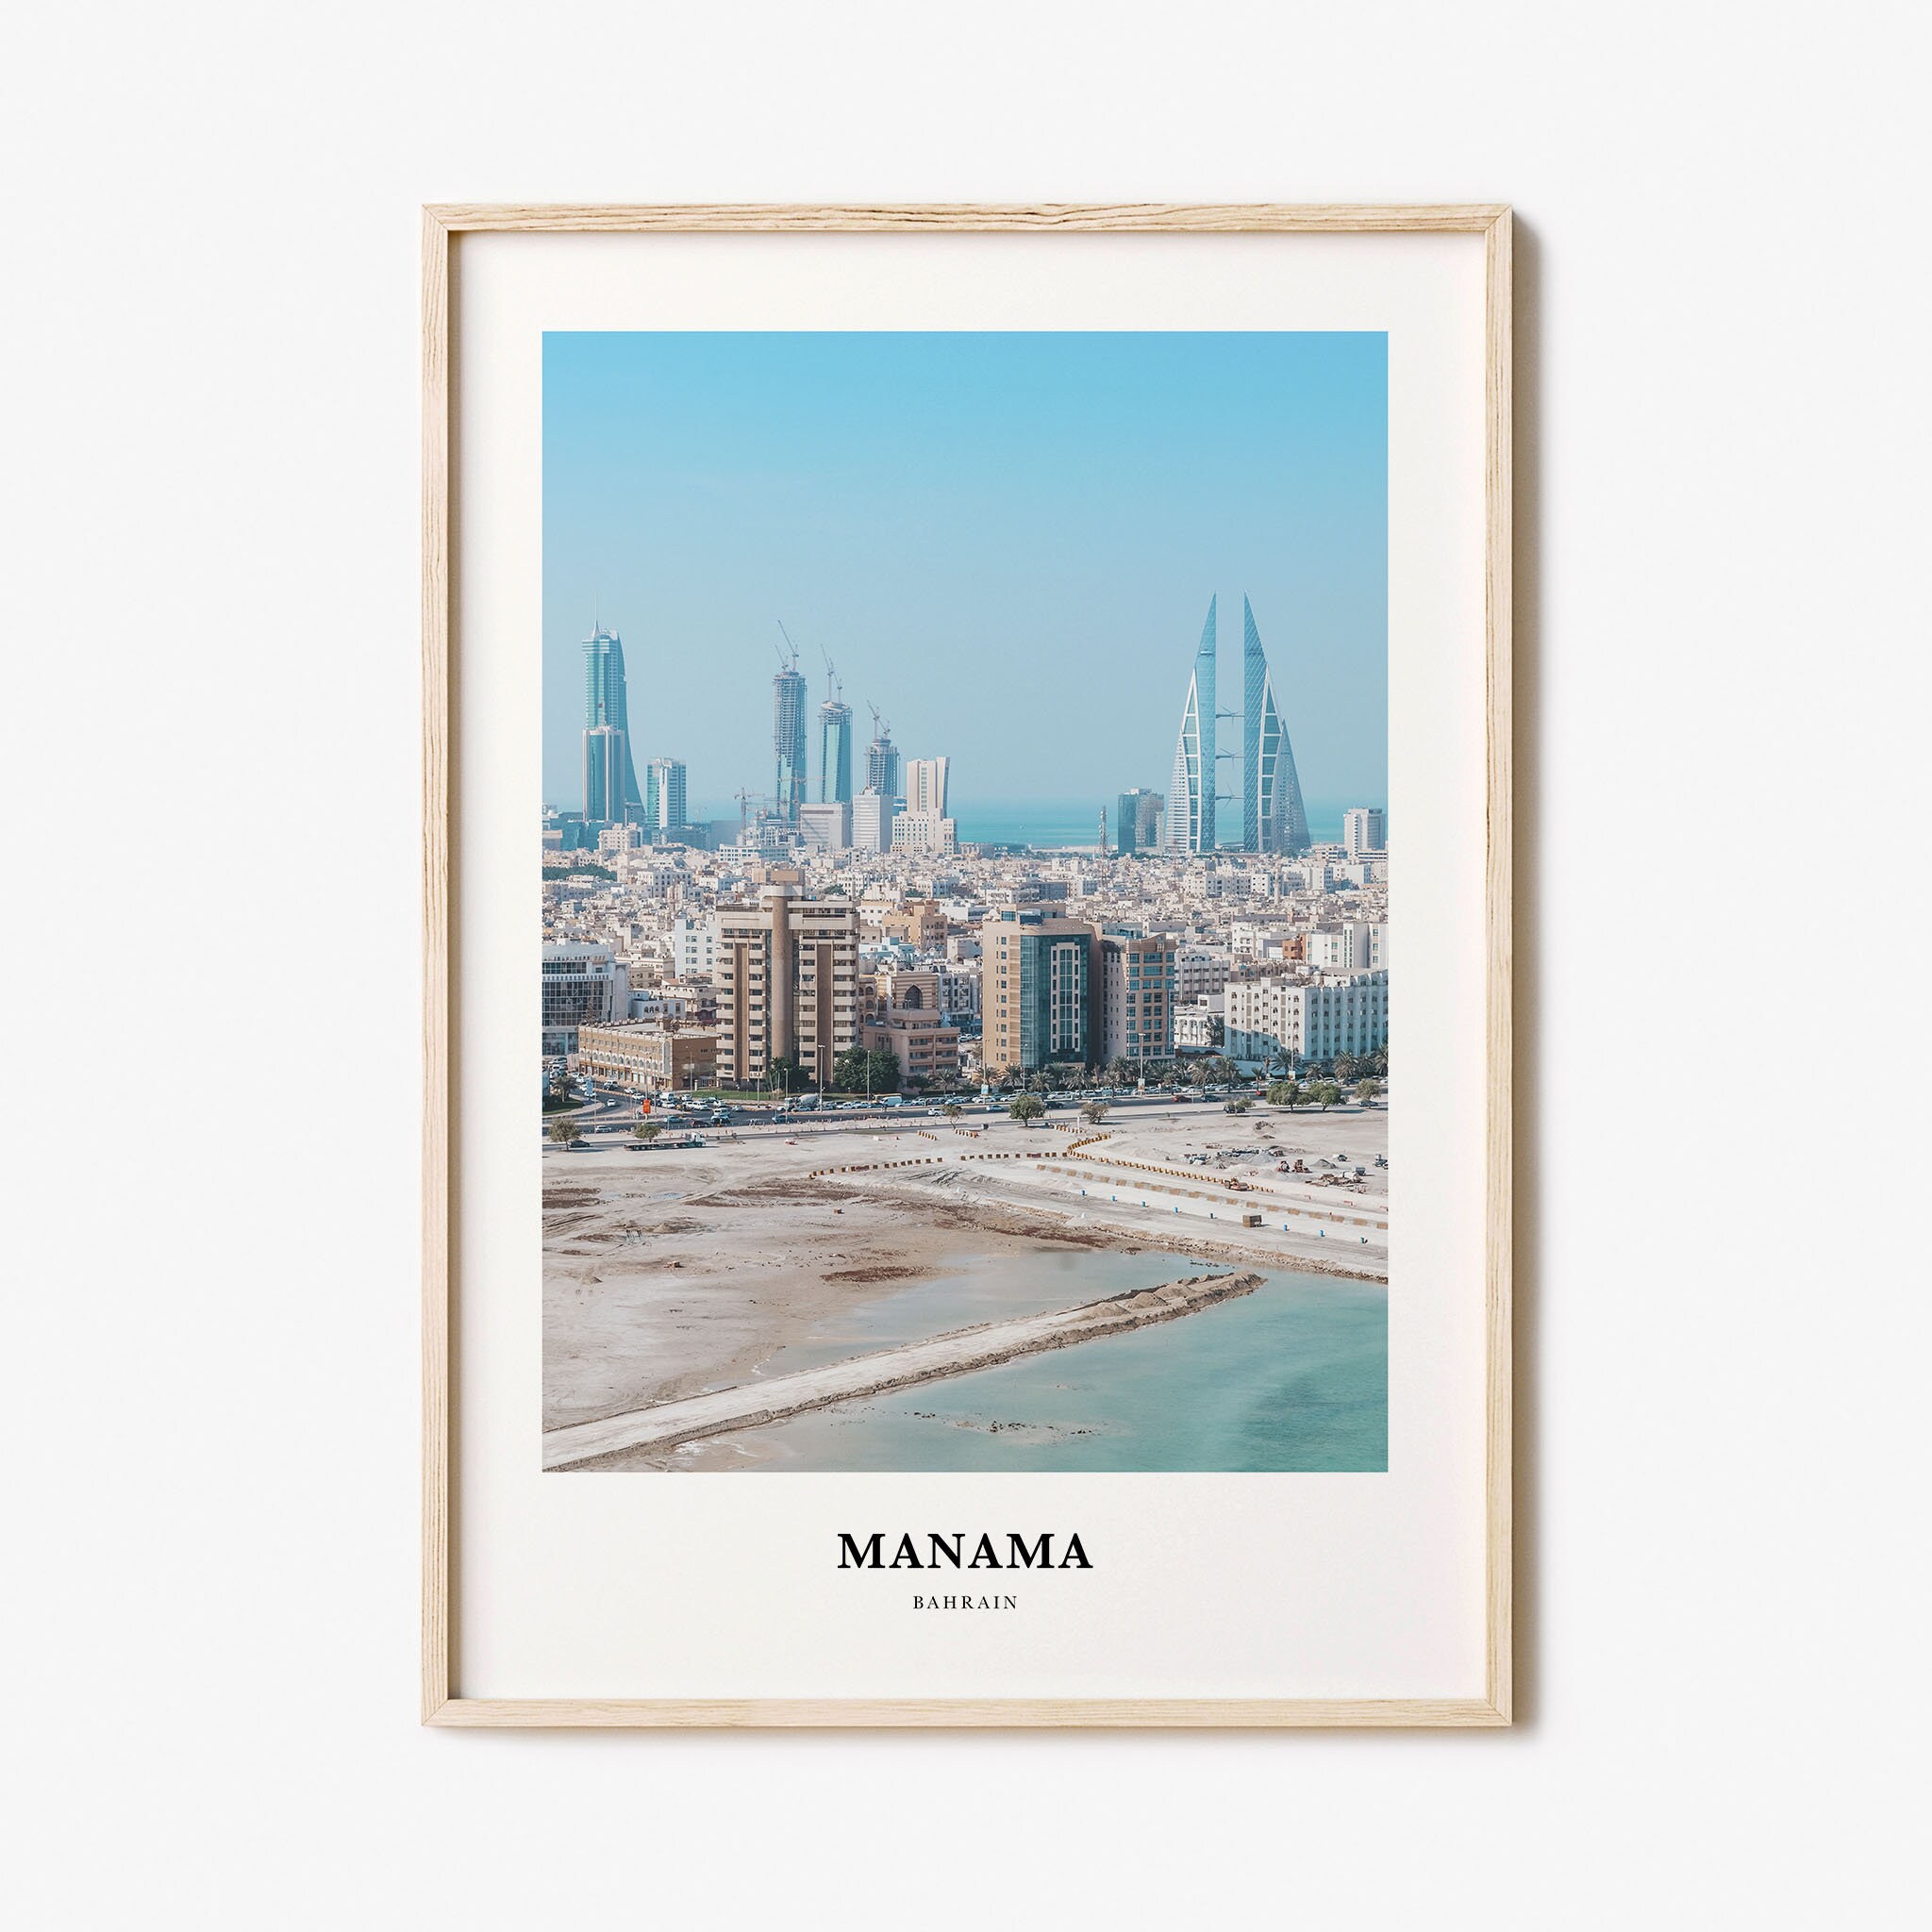 Manama photo picture